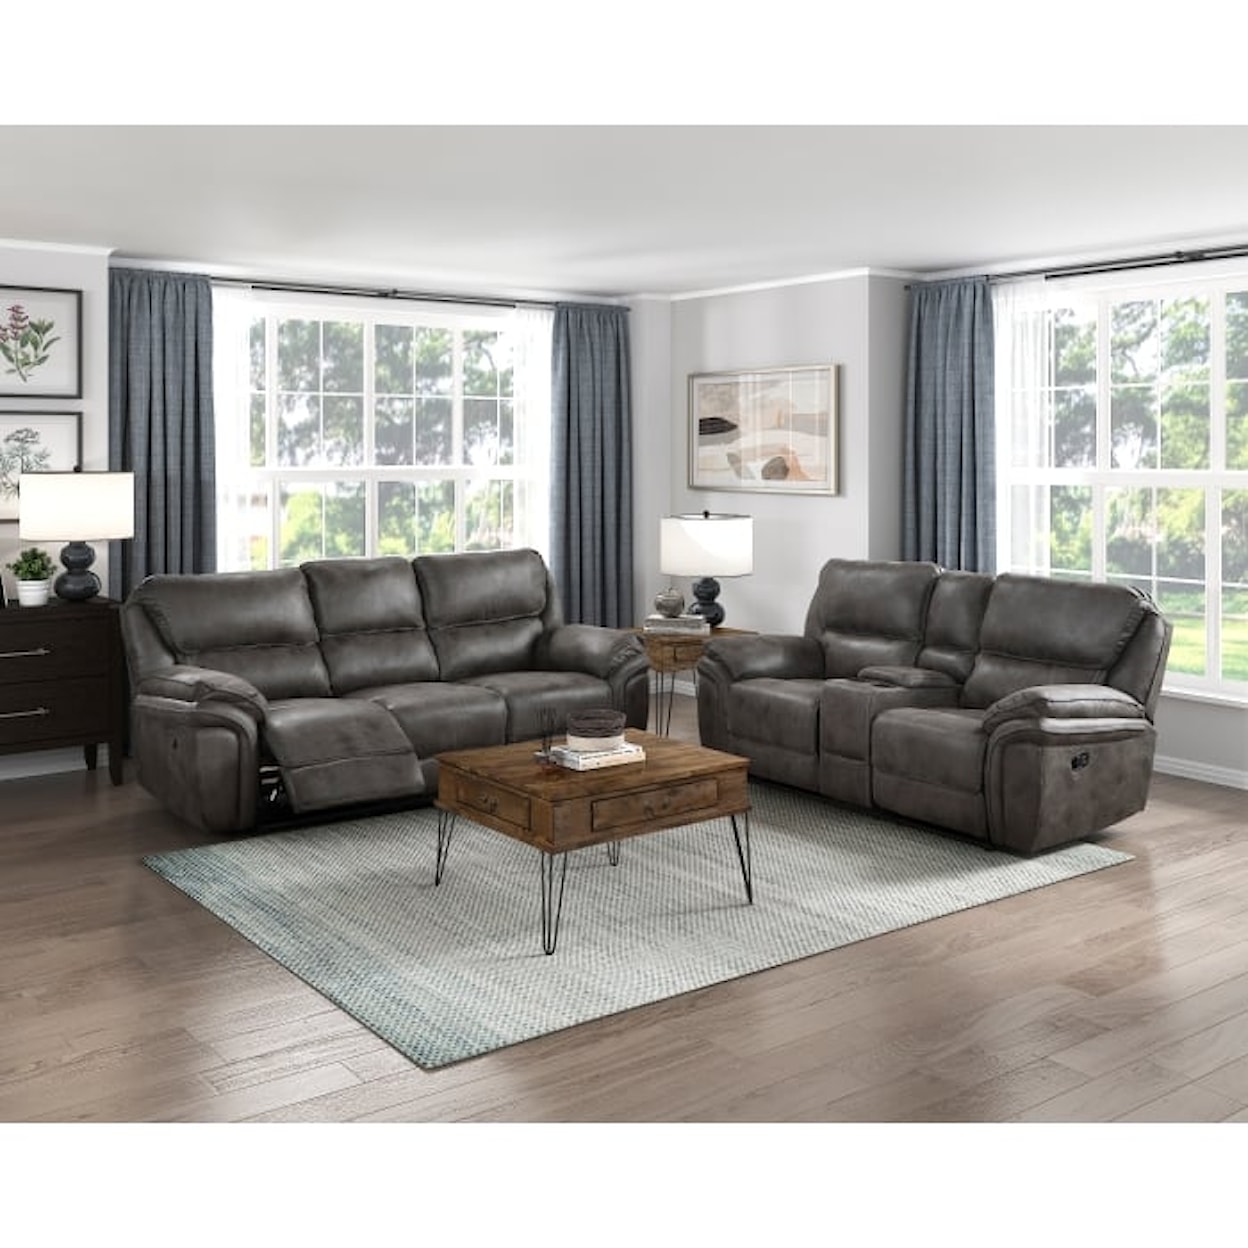 Homelegance Proctor Dual Reclining Sofa